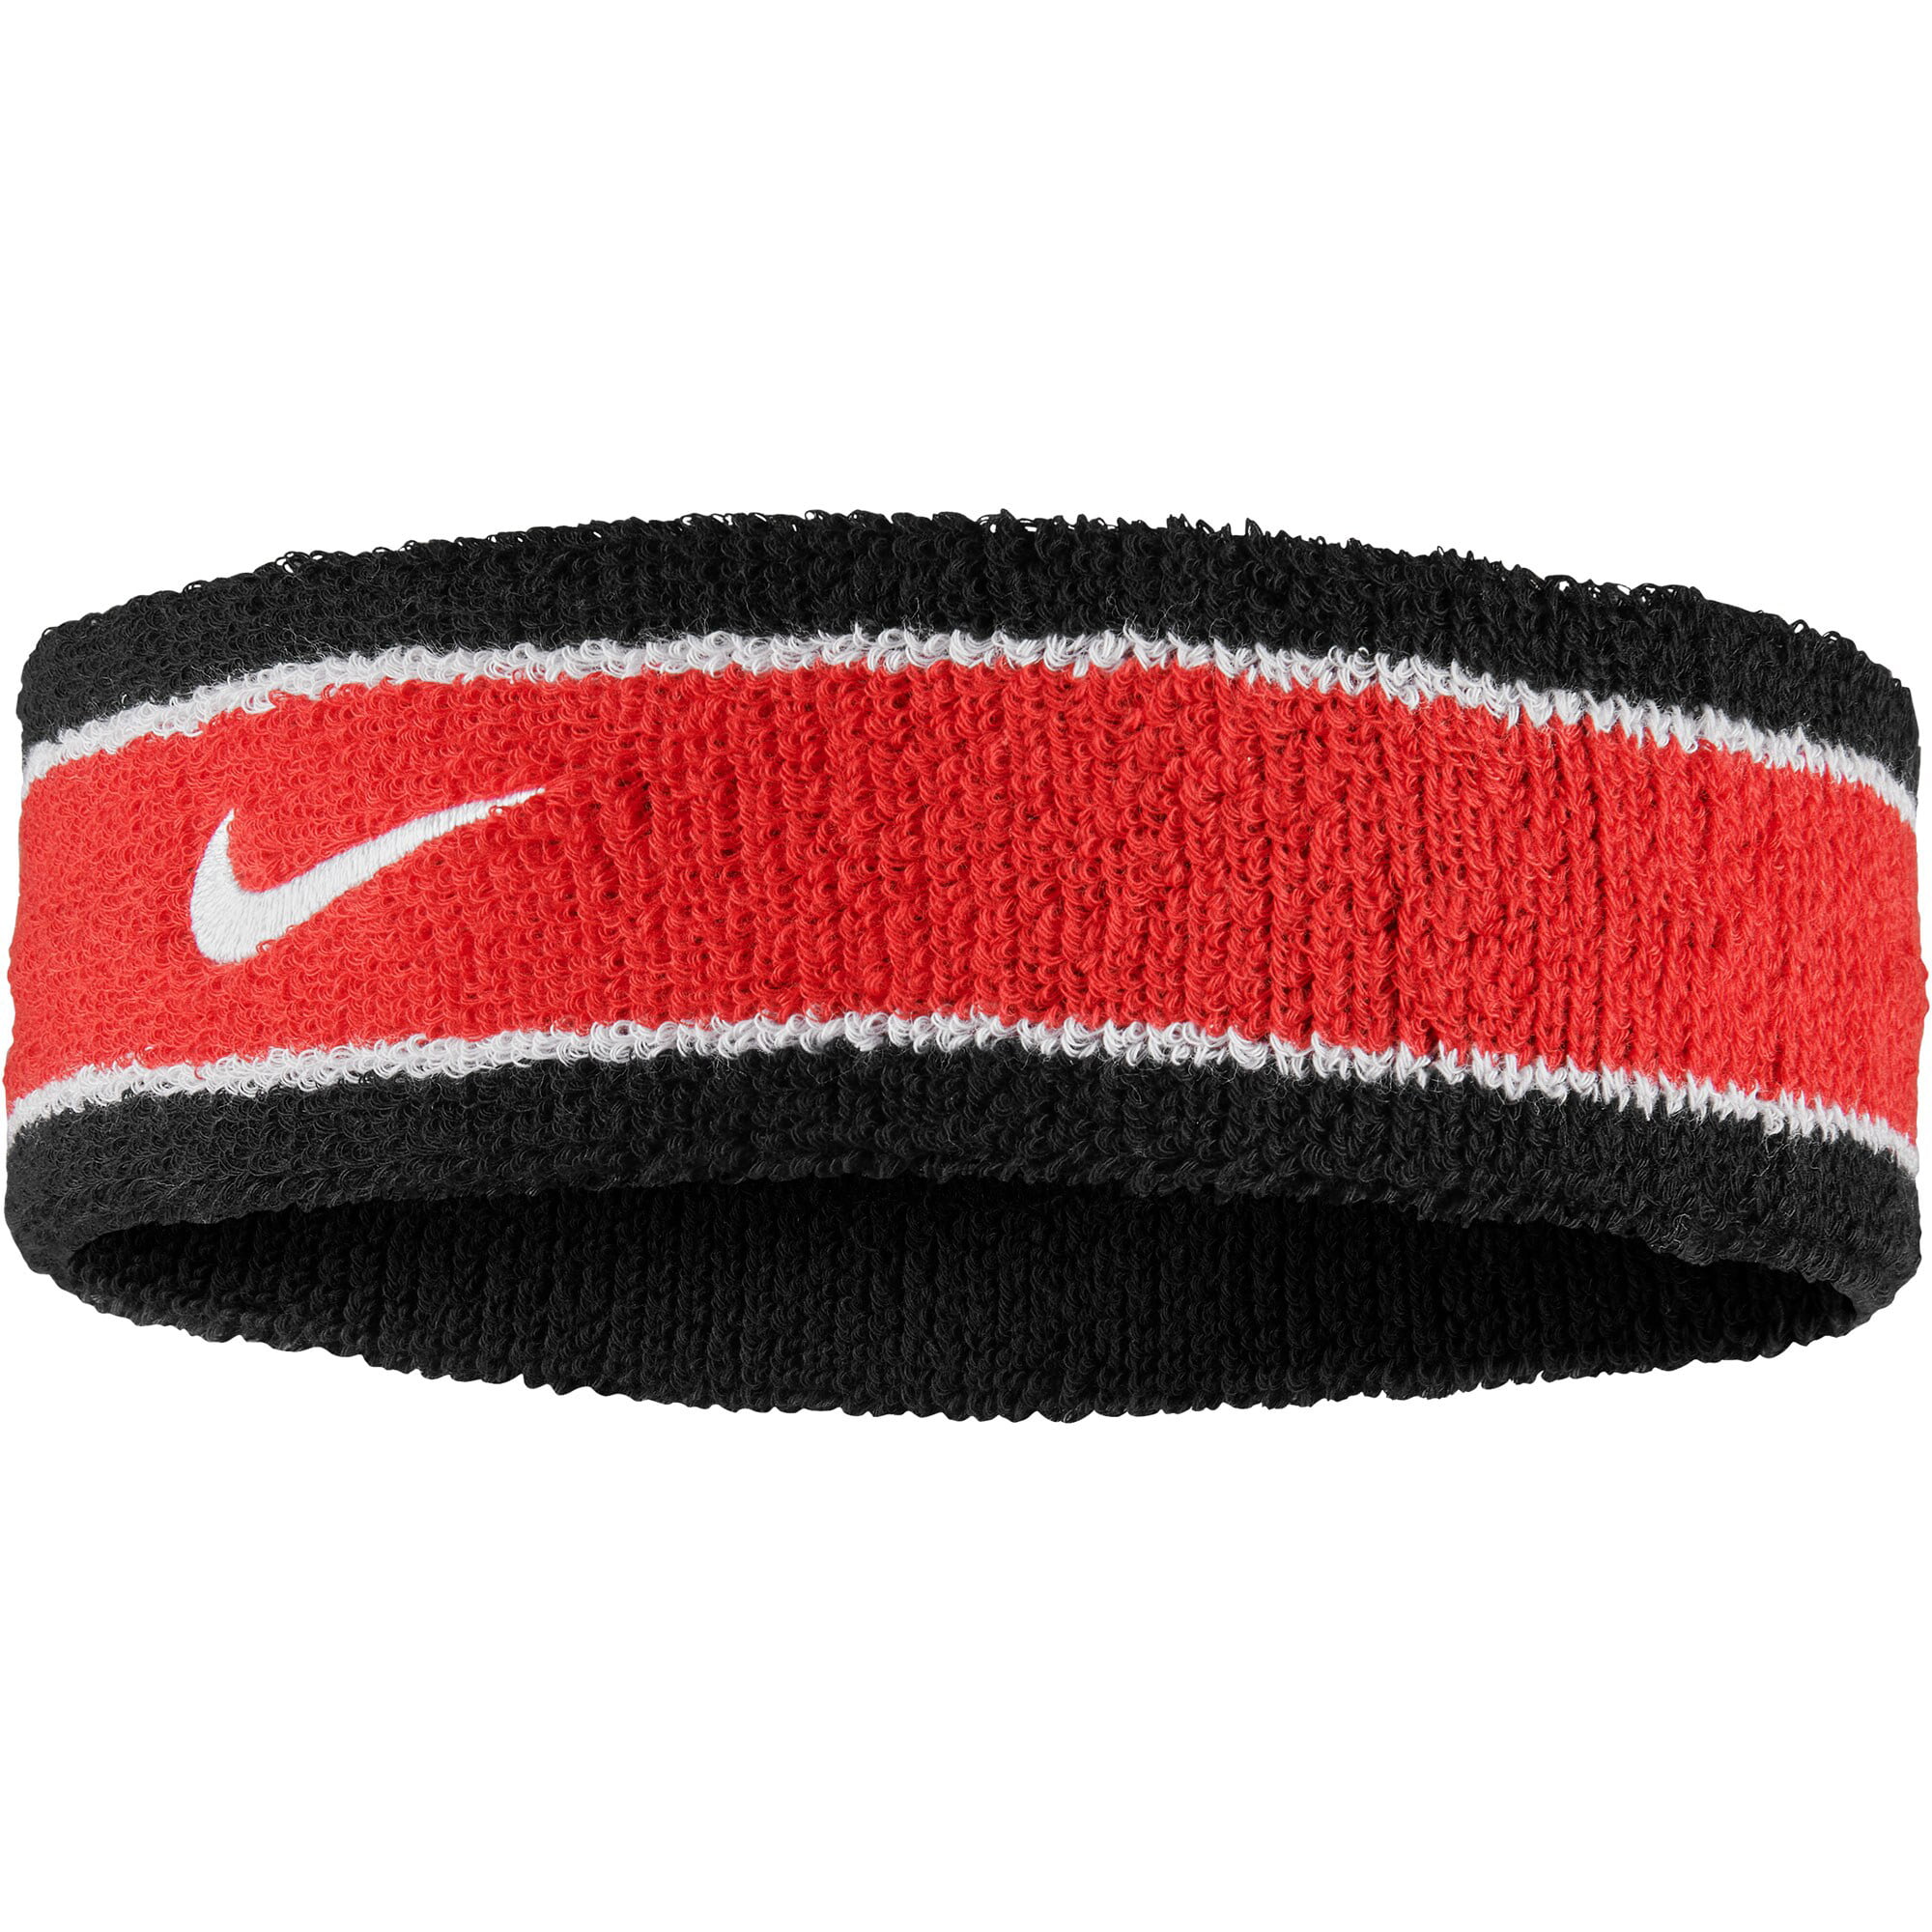 Nike Fury 2.0 Headband - Red/White - Walmart.com - Walmart.com